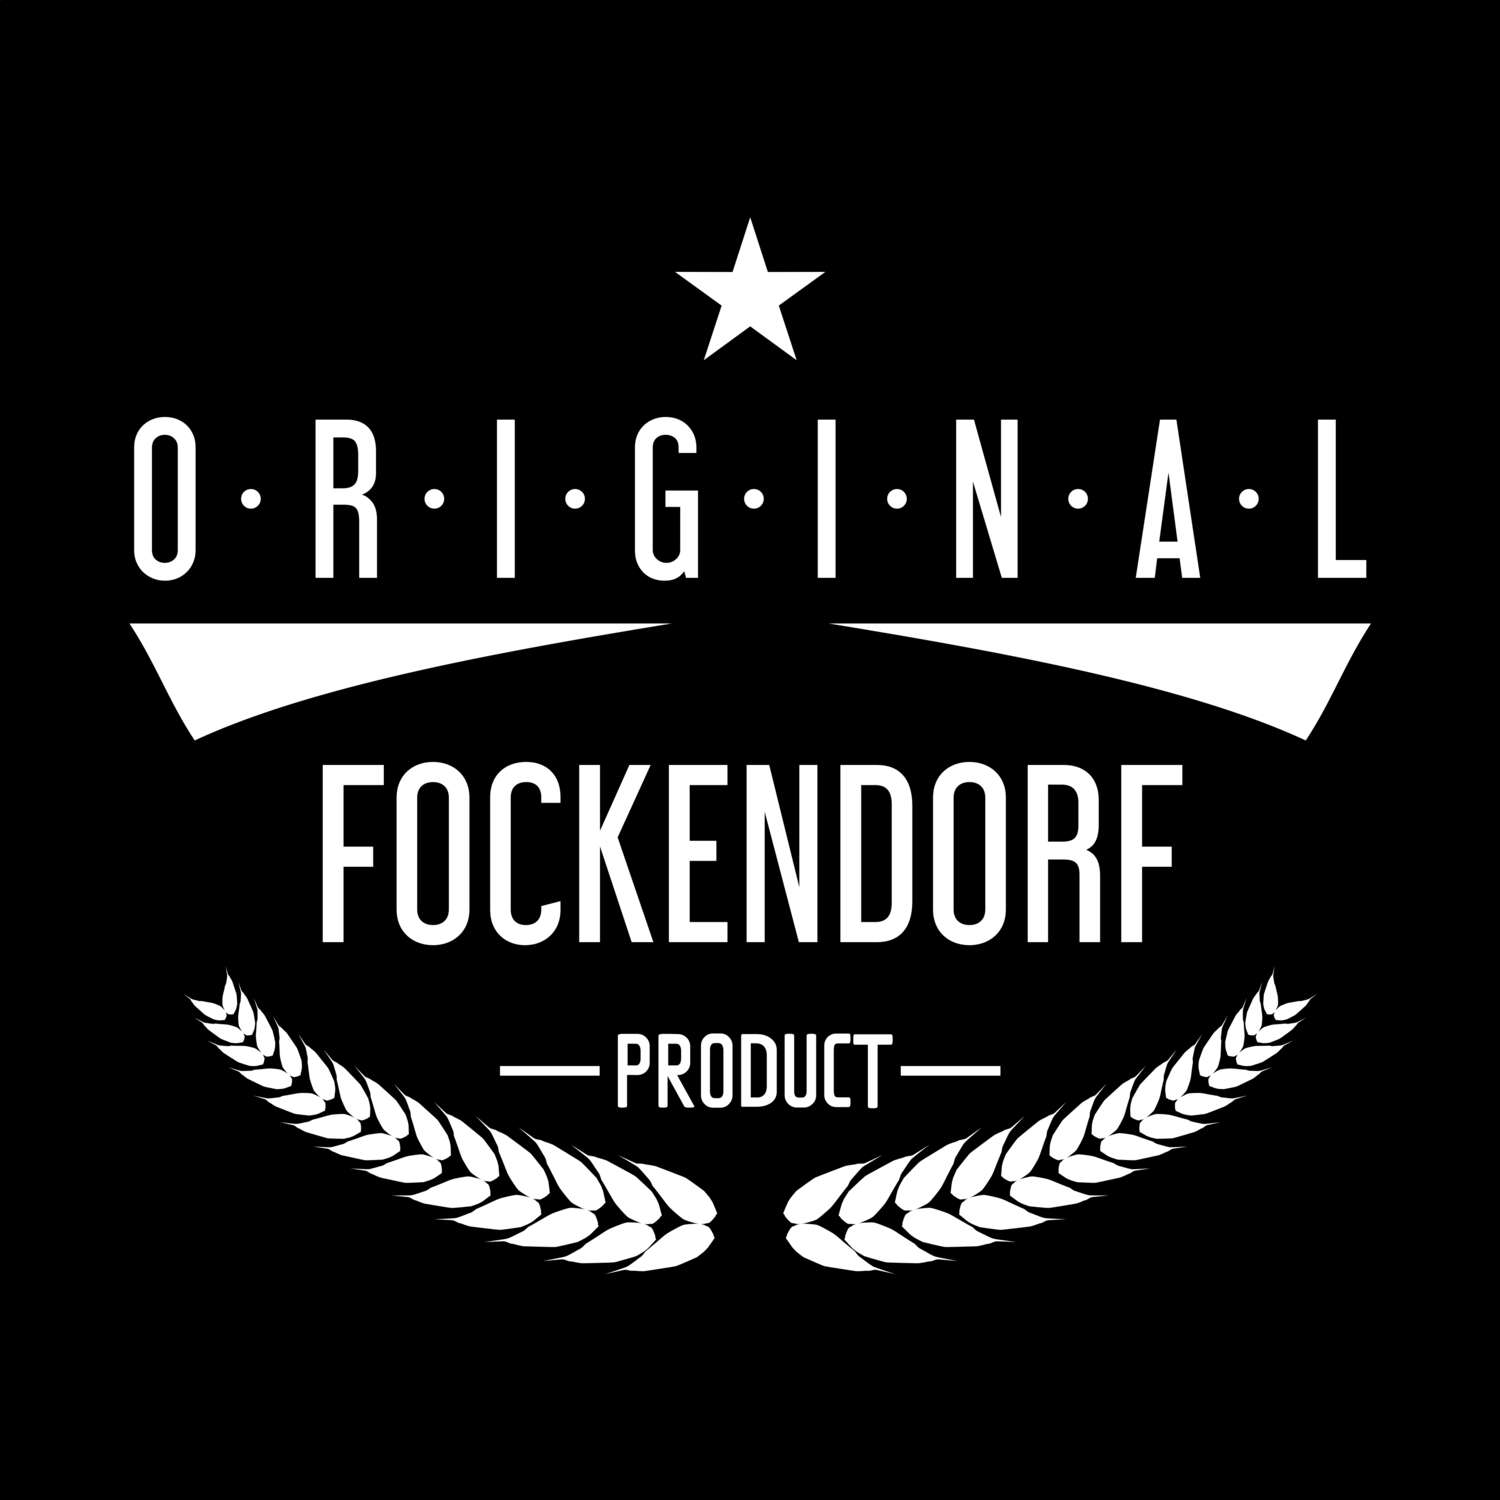 Fockendorf T-Shirt »Original Product«